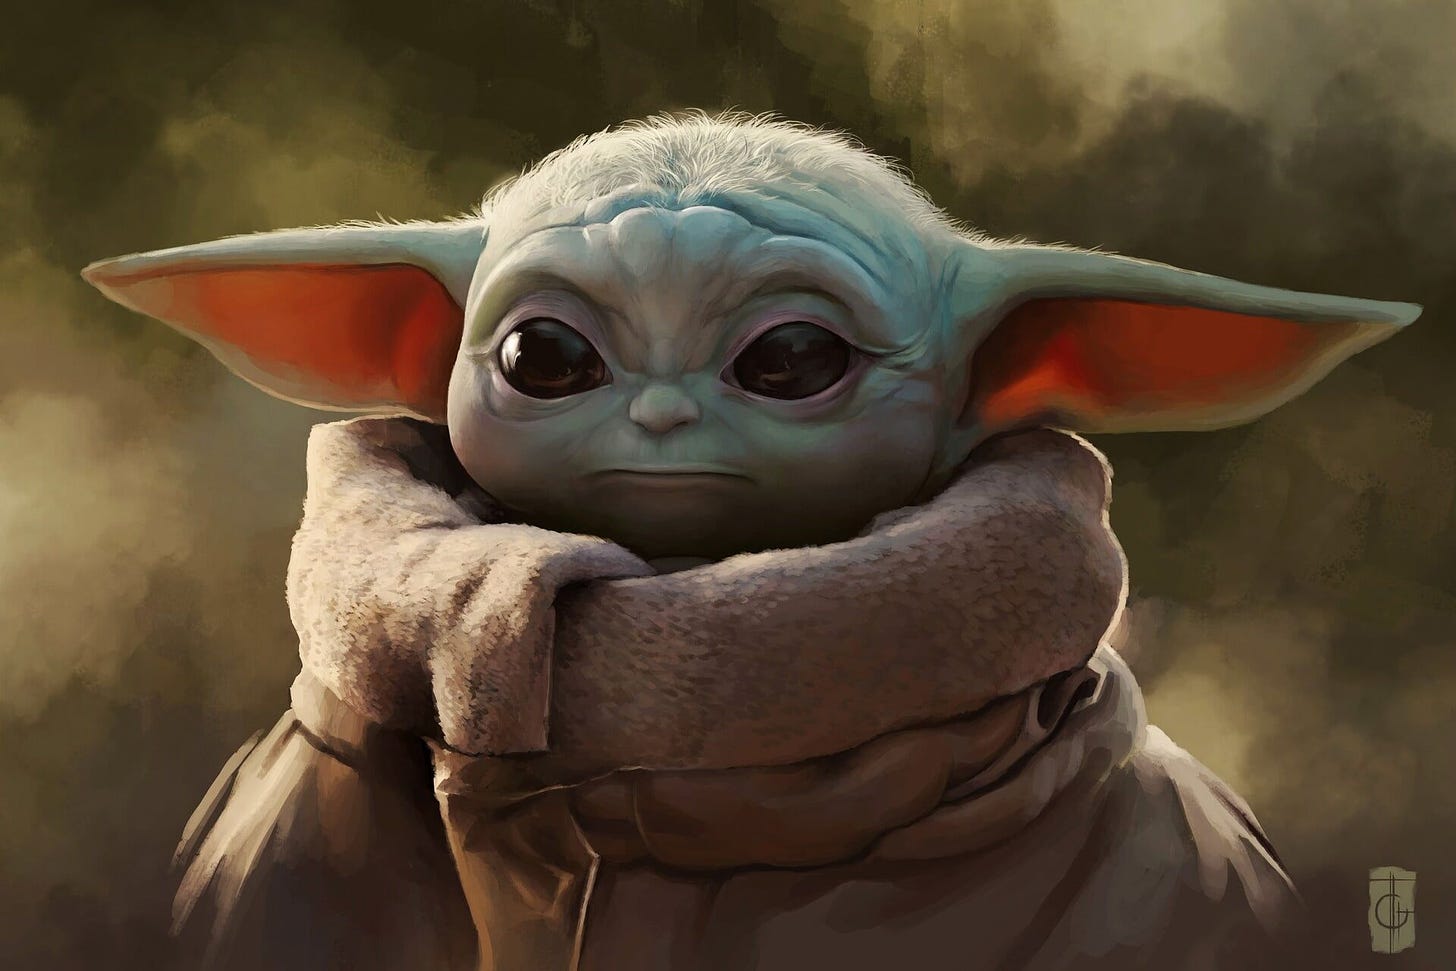 Star Wars #artwork The Mandalorian Baby Yoda #1080P #wallpaper #hdwallpaper  #desktop in 2020 | Star wars pictures, Star wars images, Yoda wallpaper